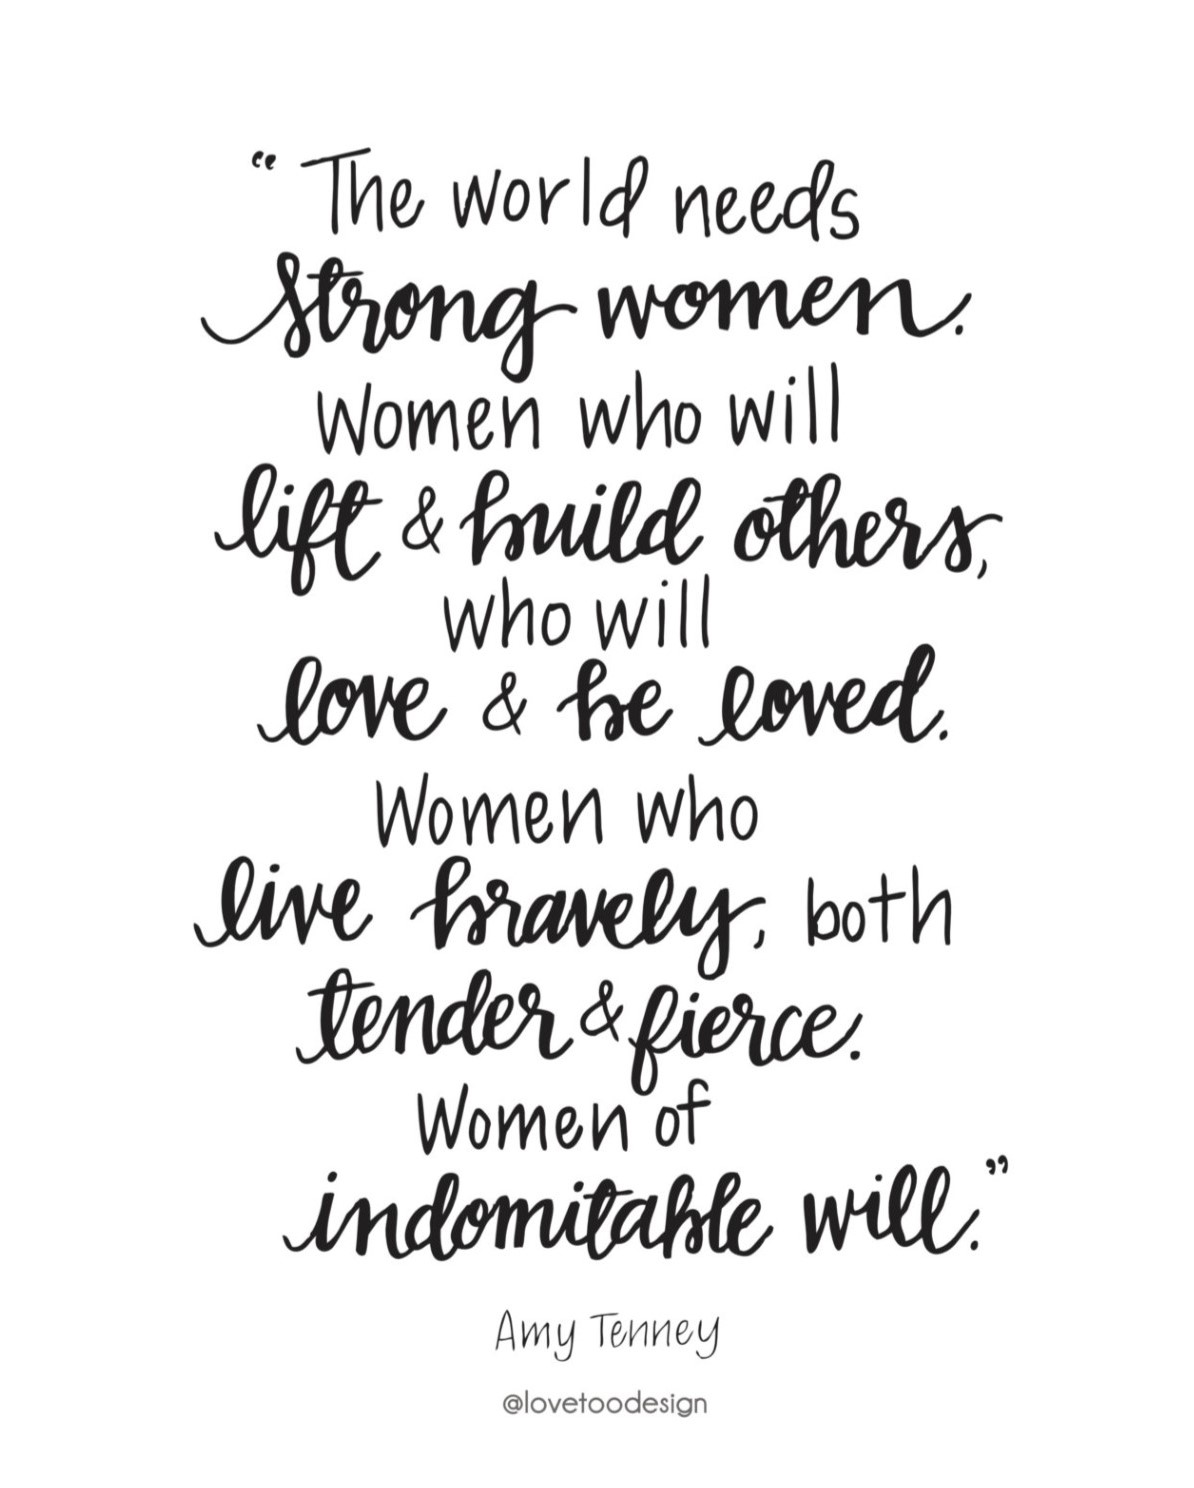 The world needs women who...